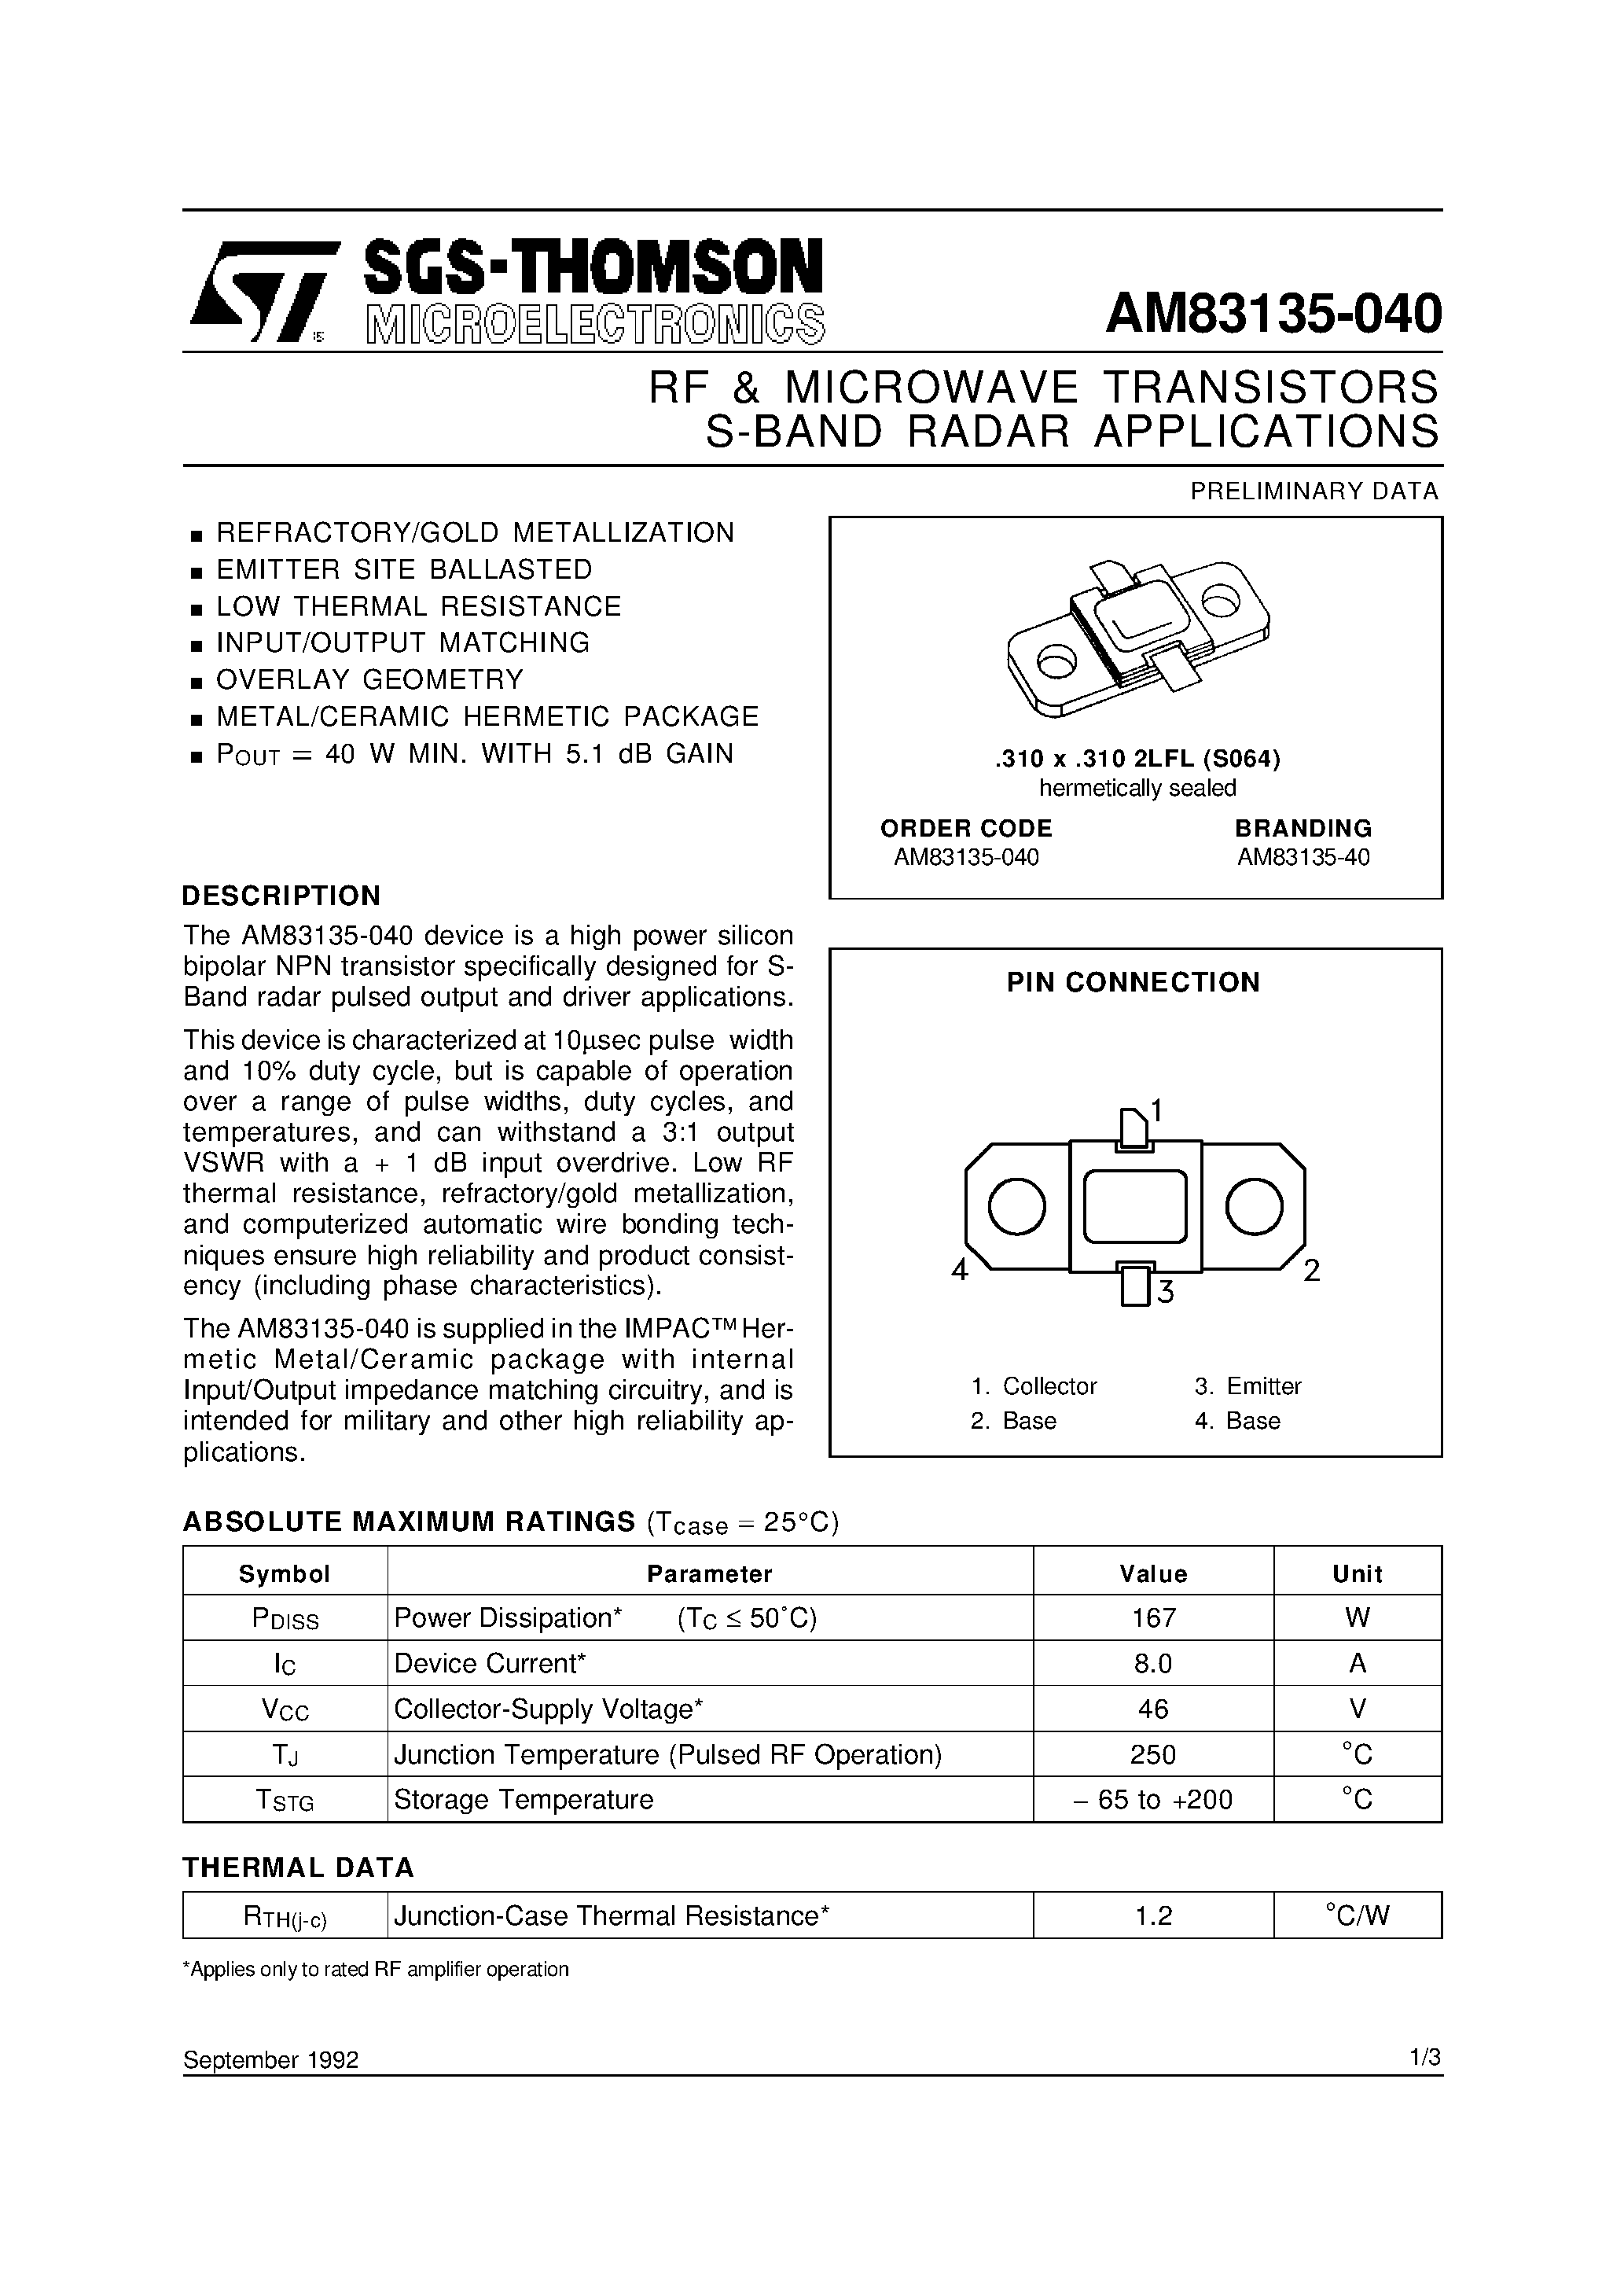 Datasheet AM83135-040 - RF & MICROWAVE TRANSISTORS S-BAND RADAR APPLICATIONS page 1